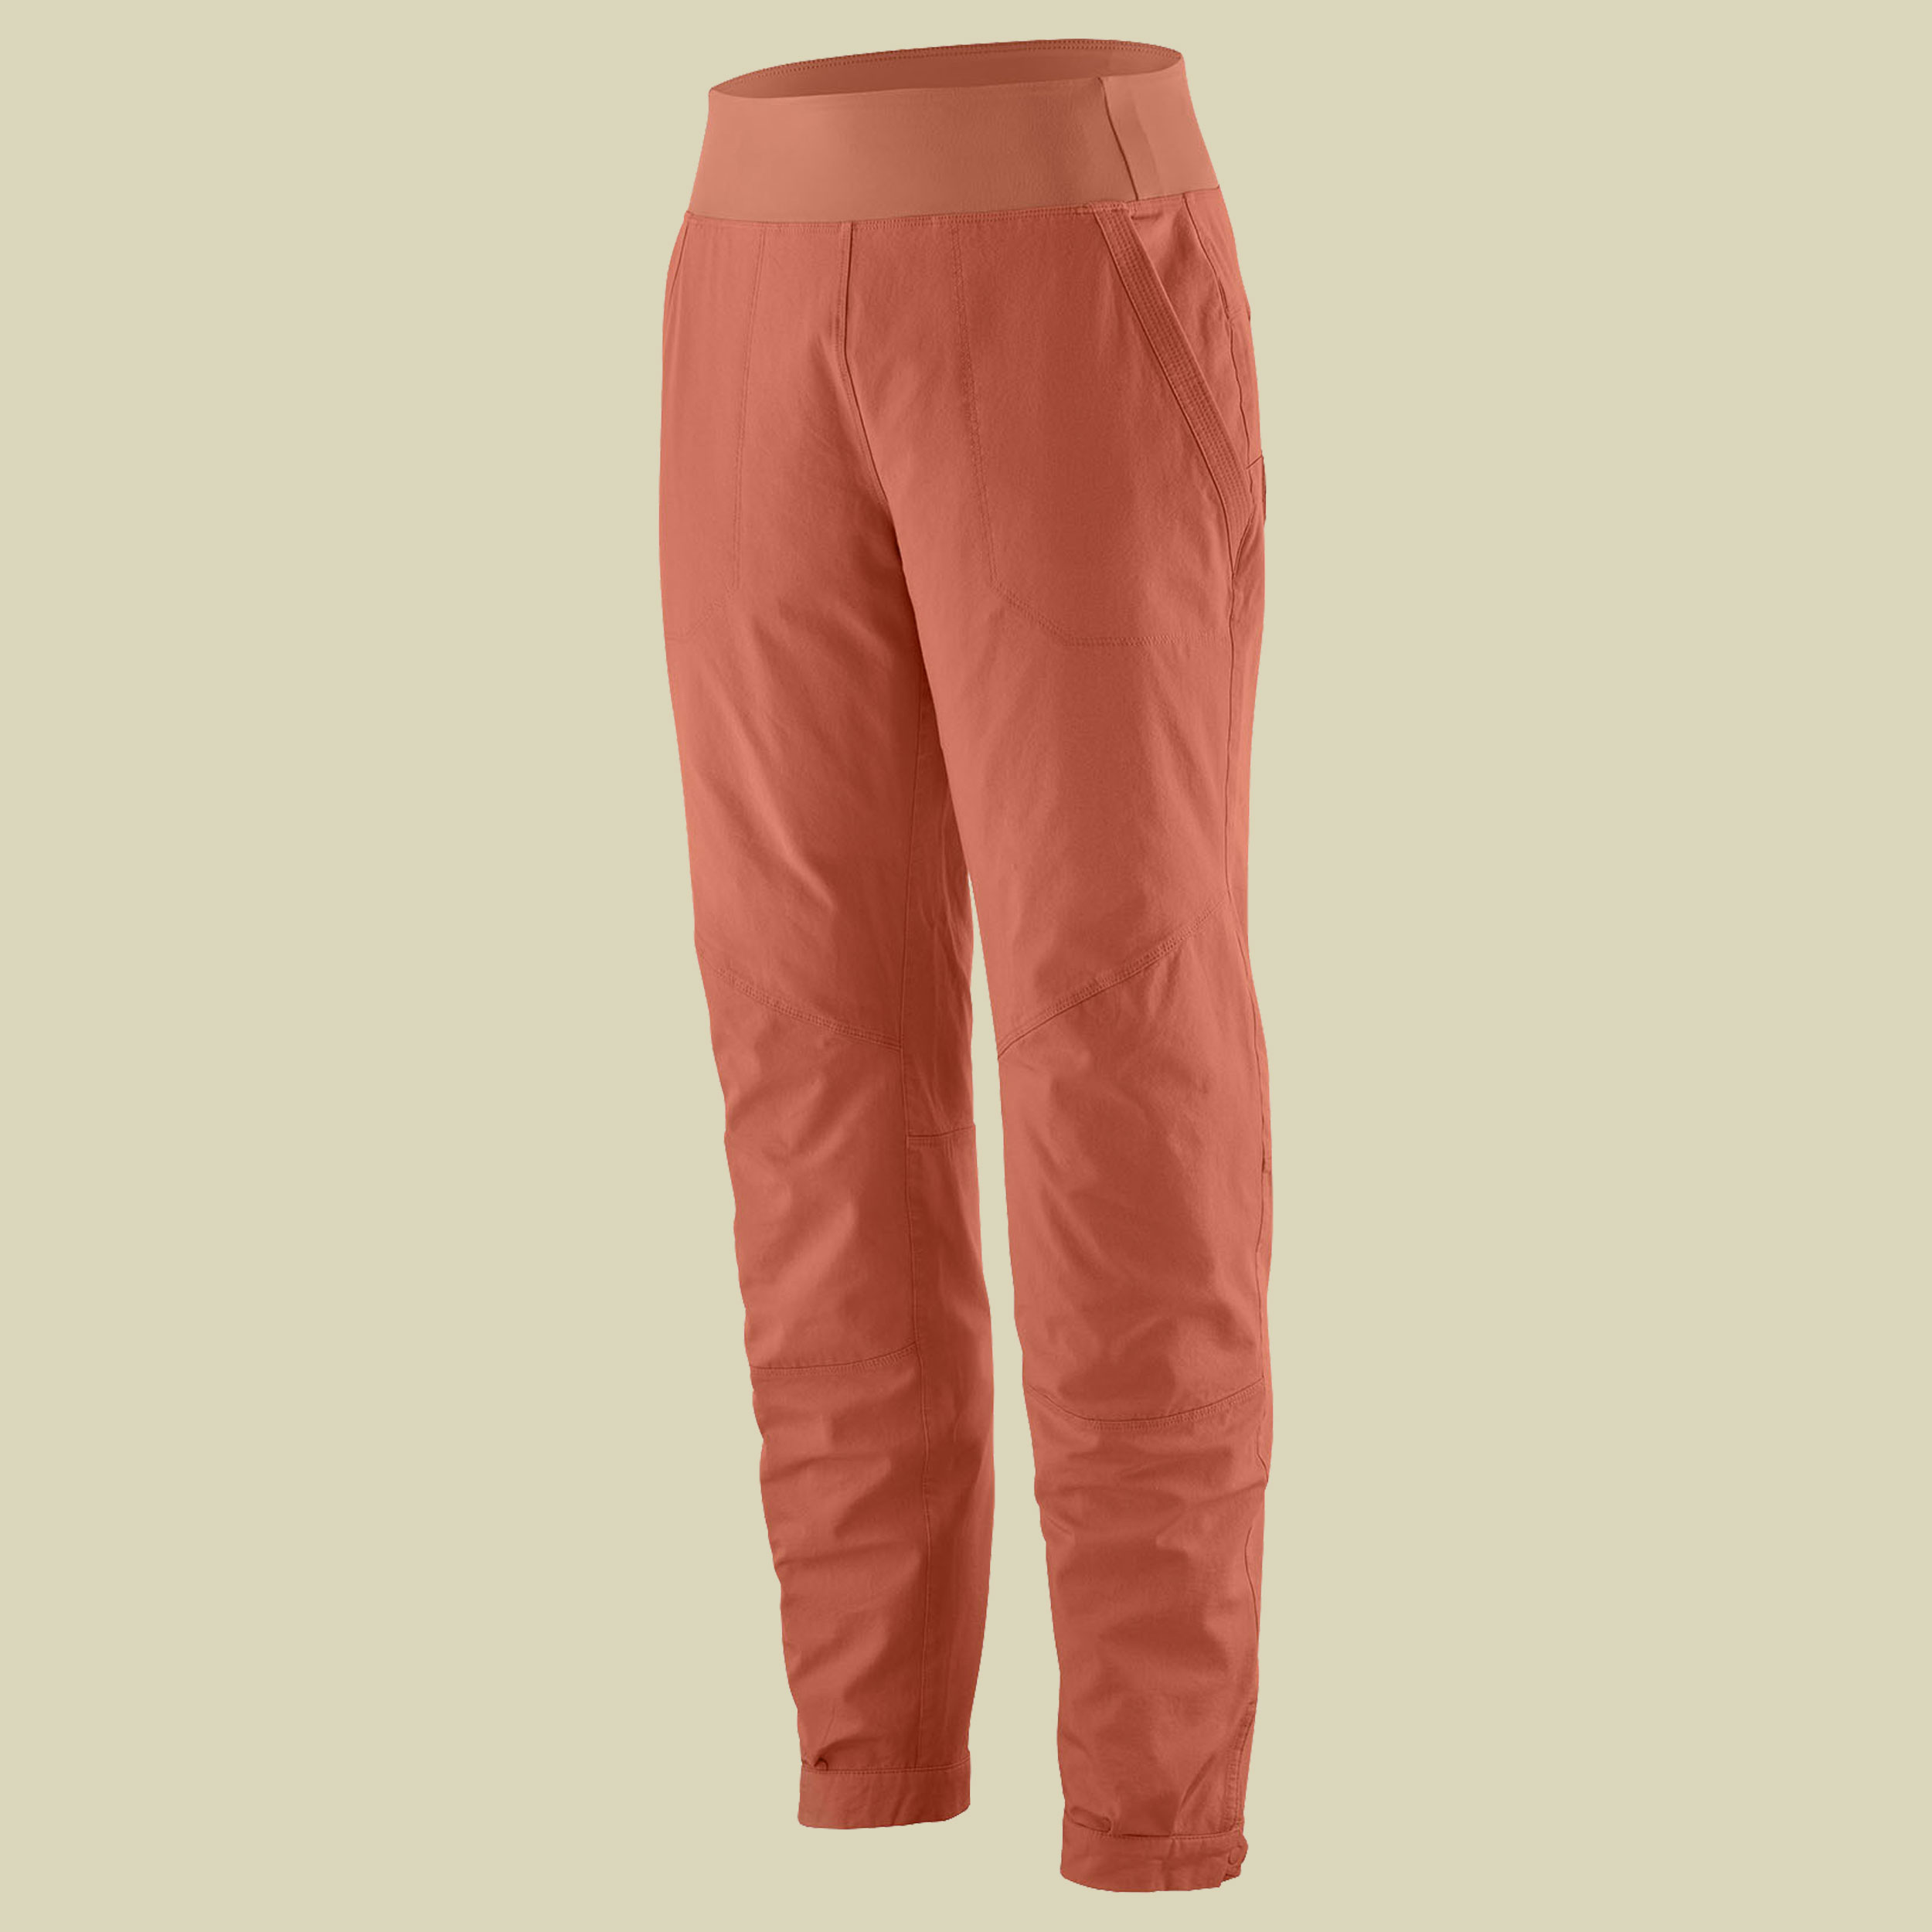 Caliza Rock Pants Women orange 8 - sienna clay